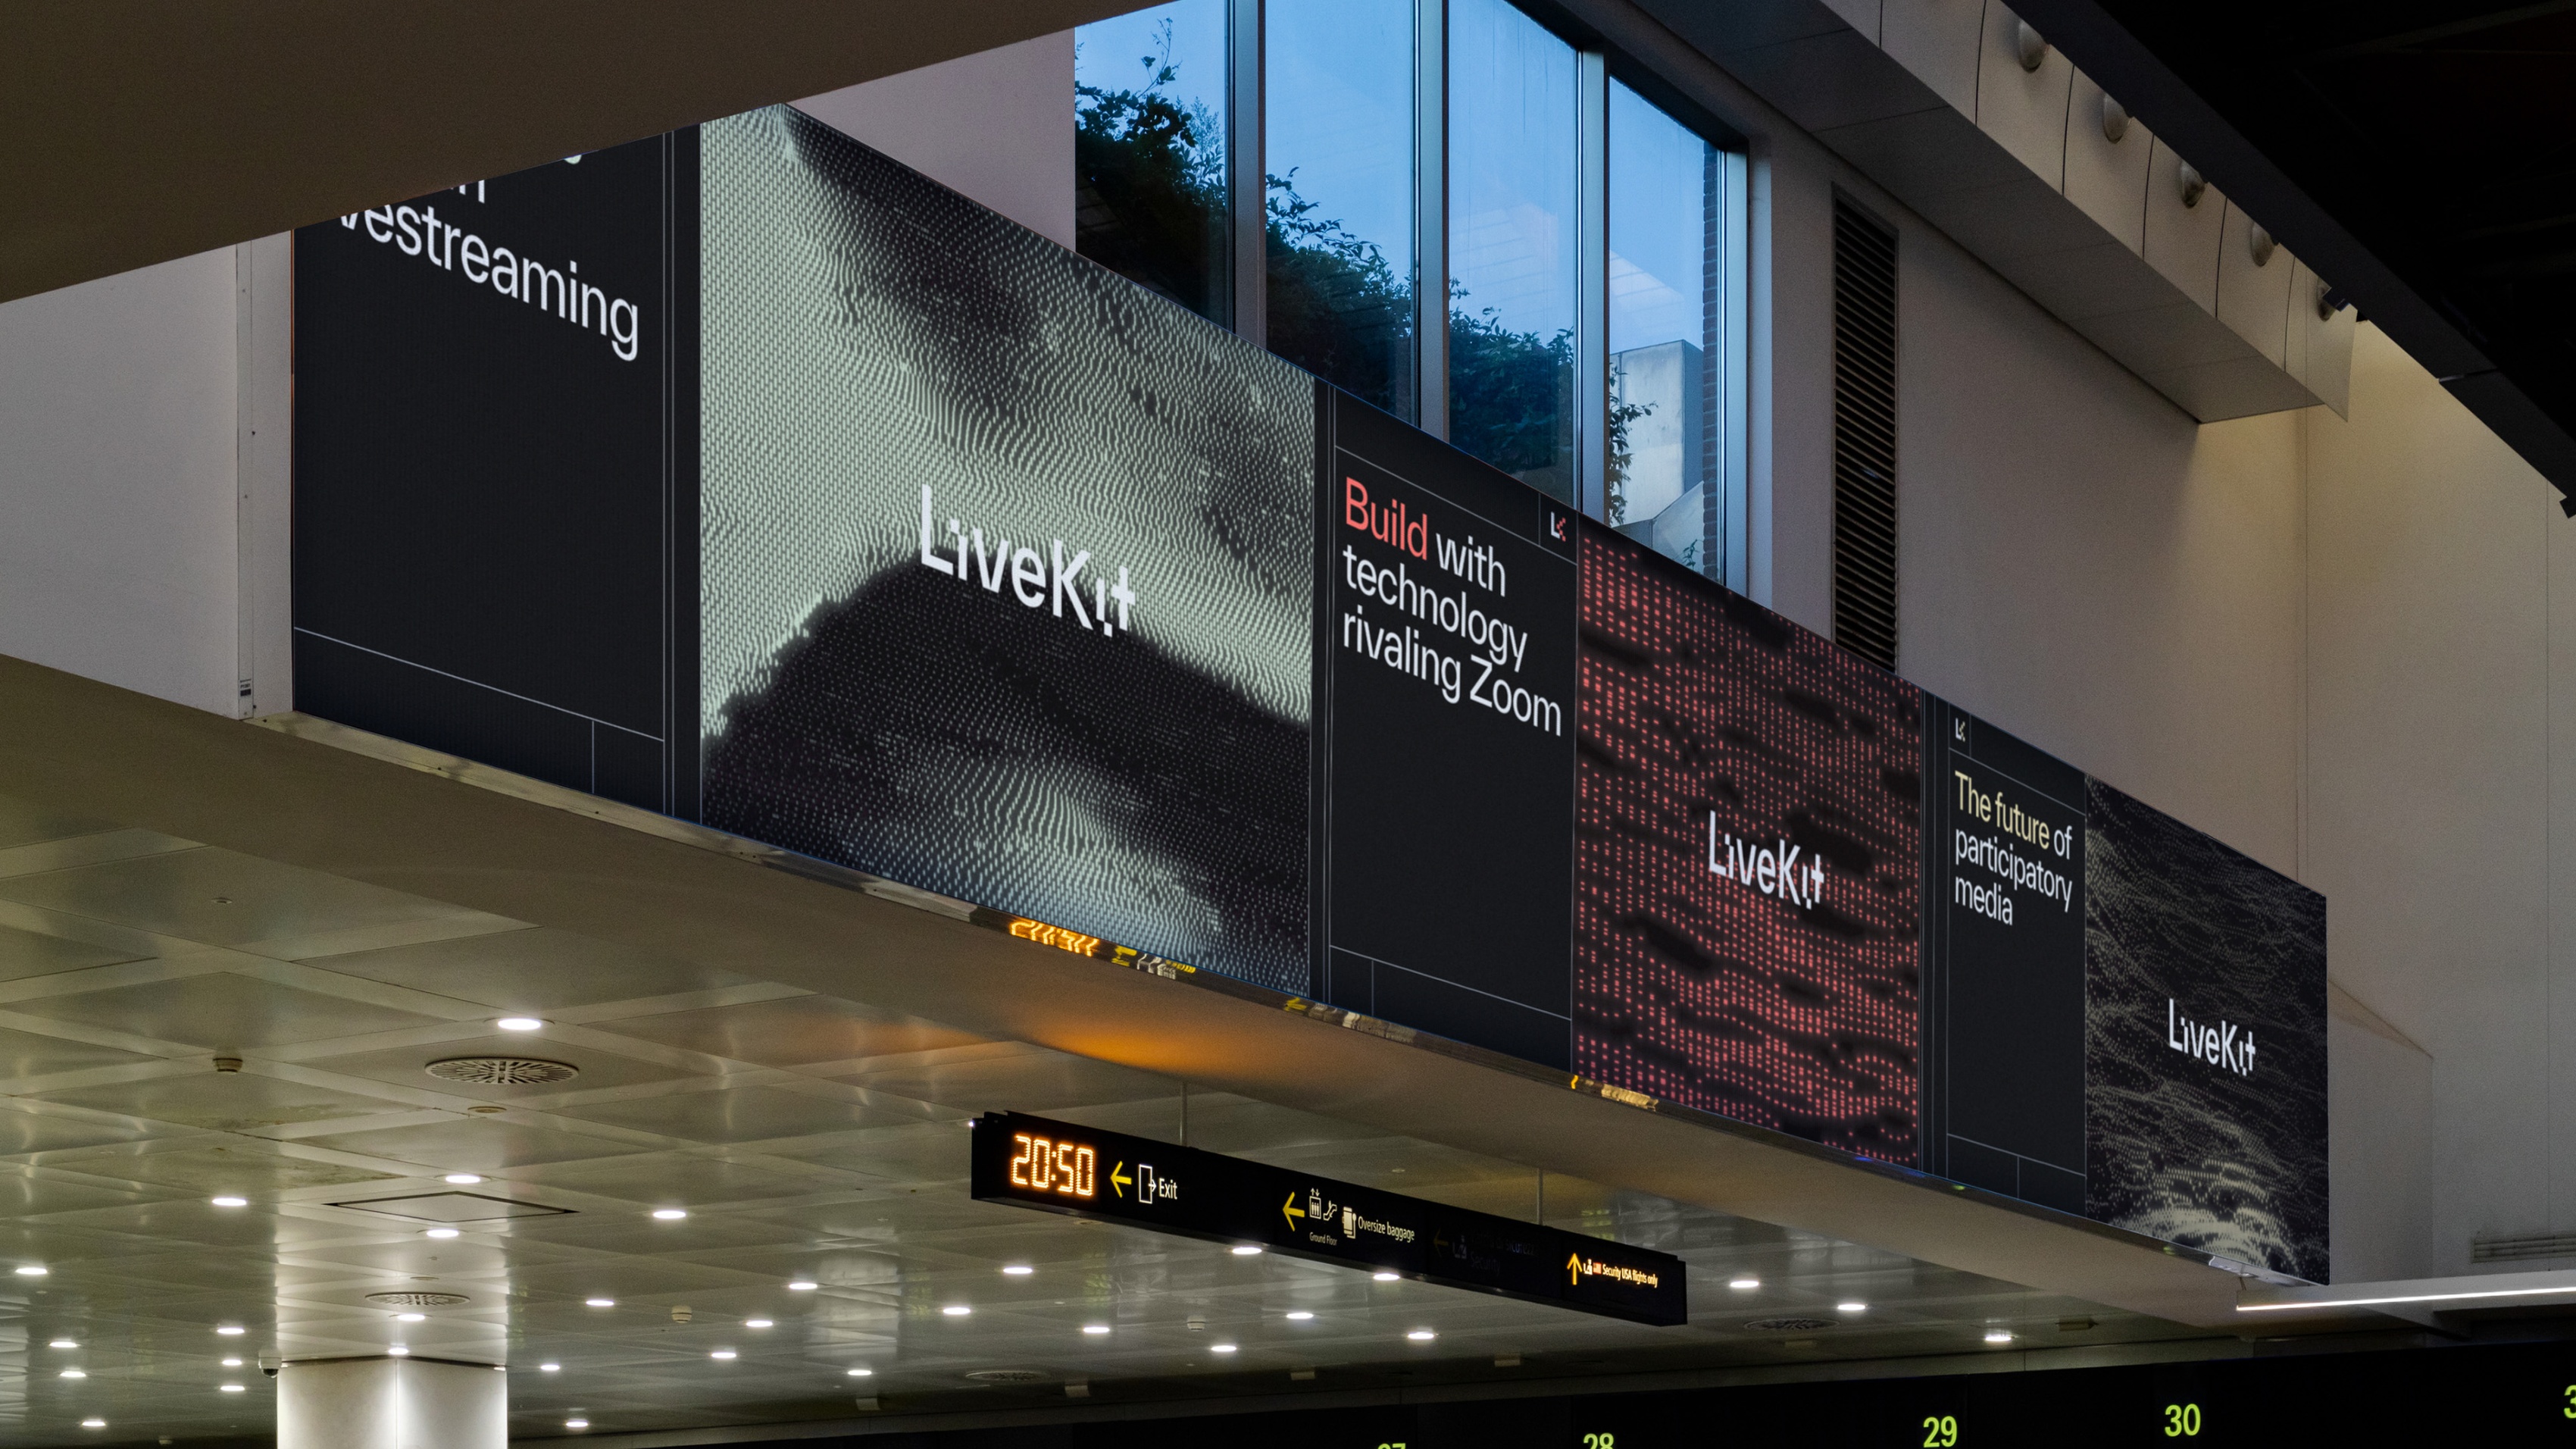 Livekit Billboards in a train station